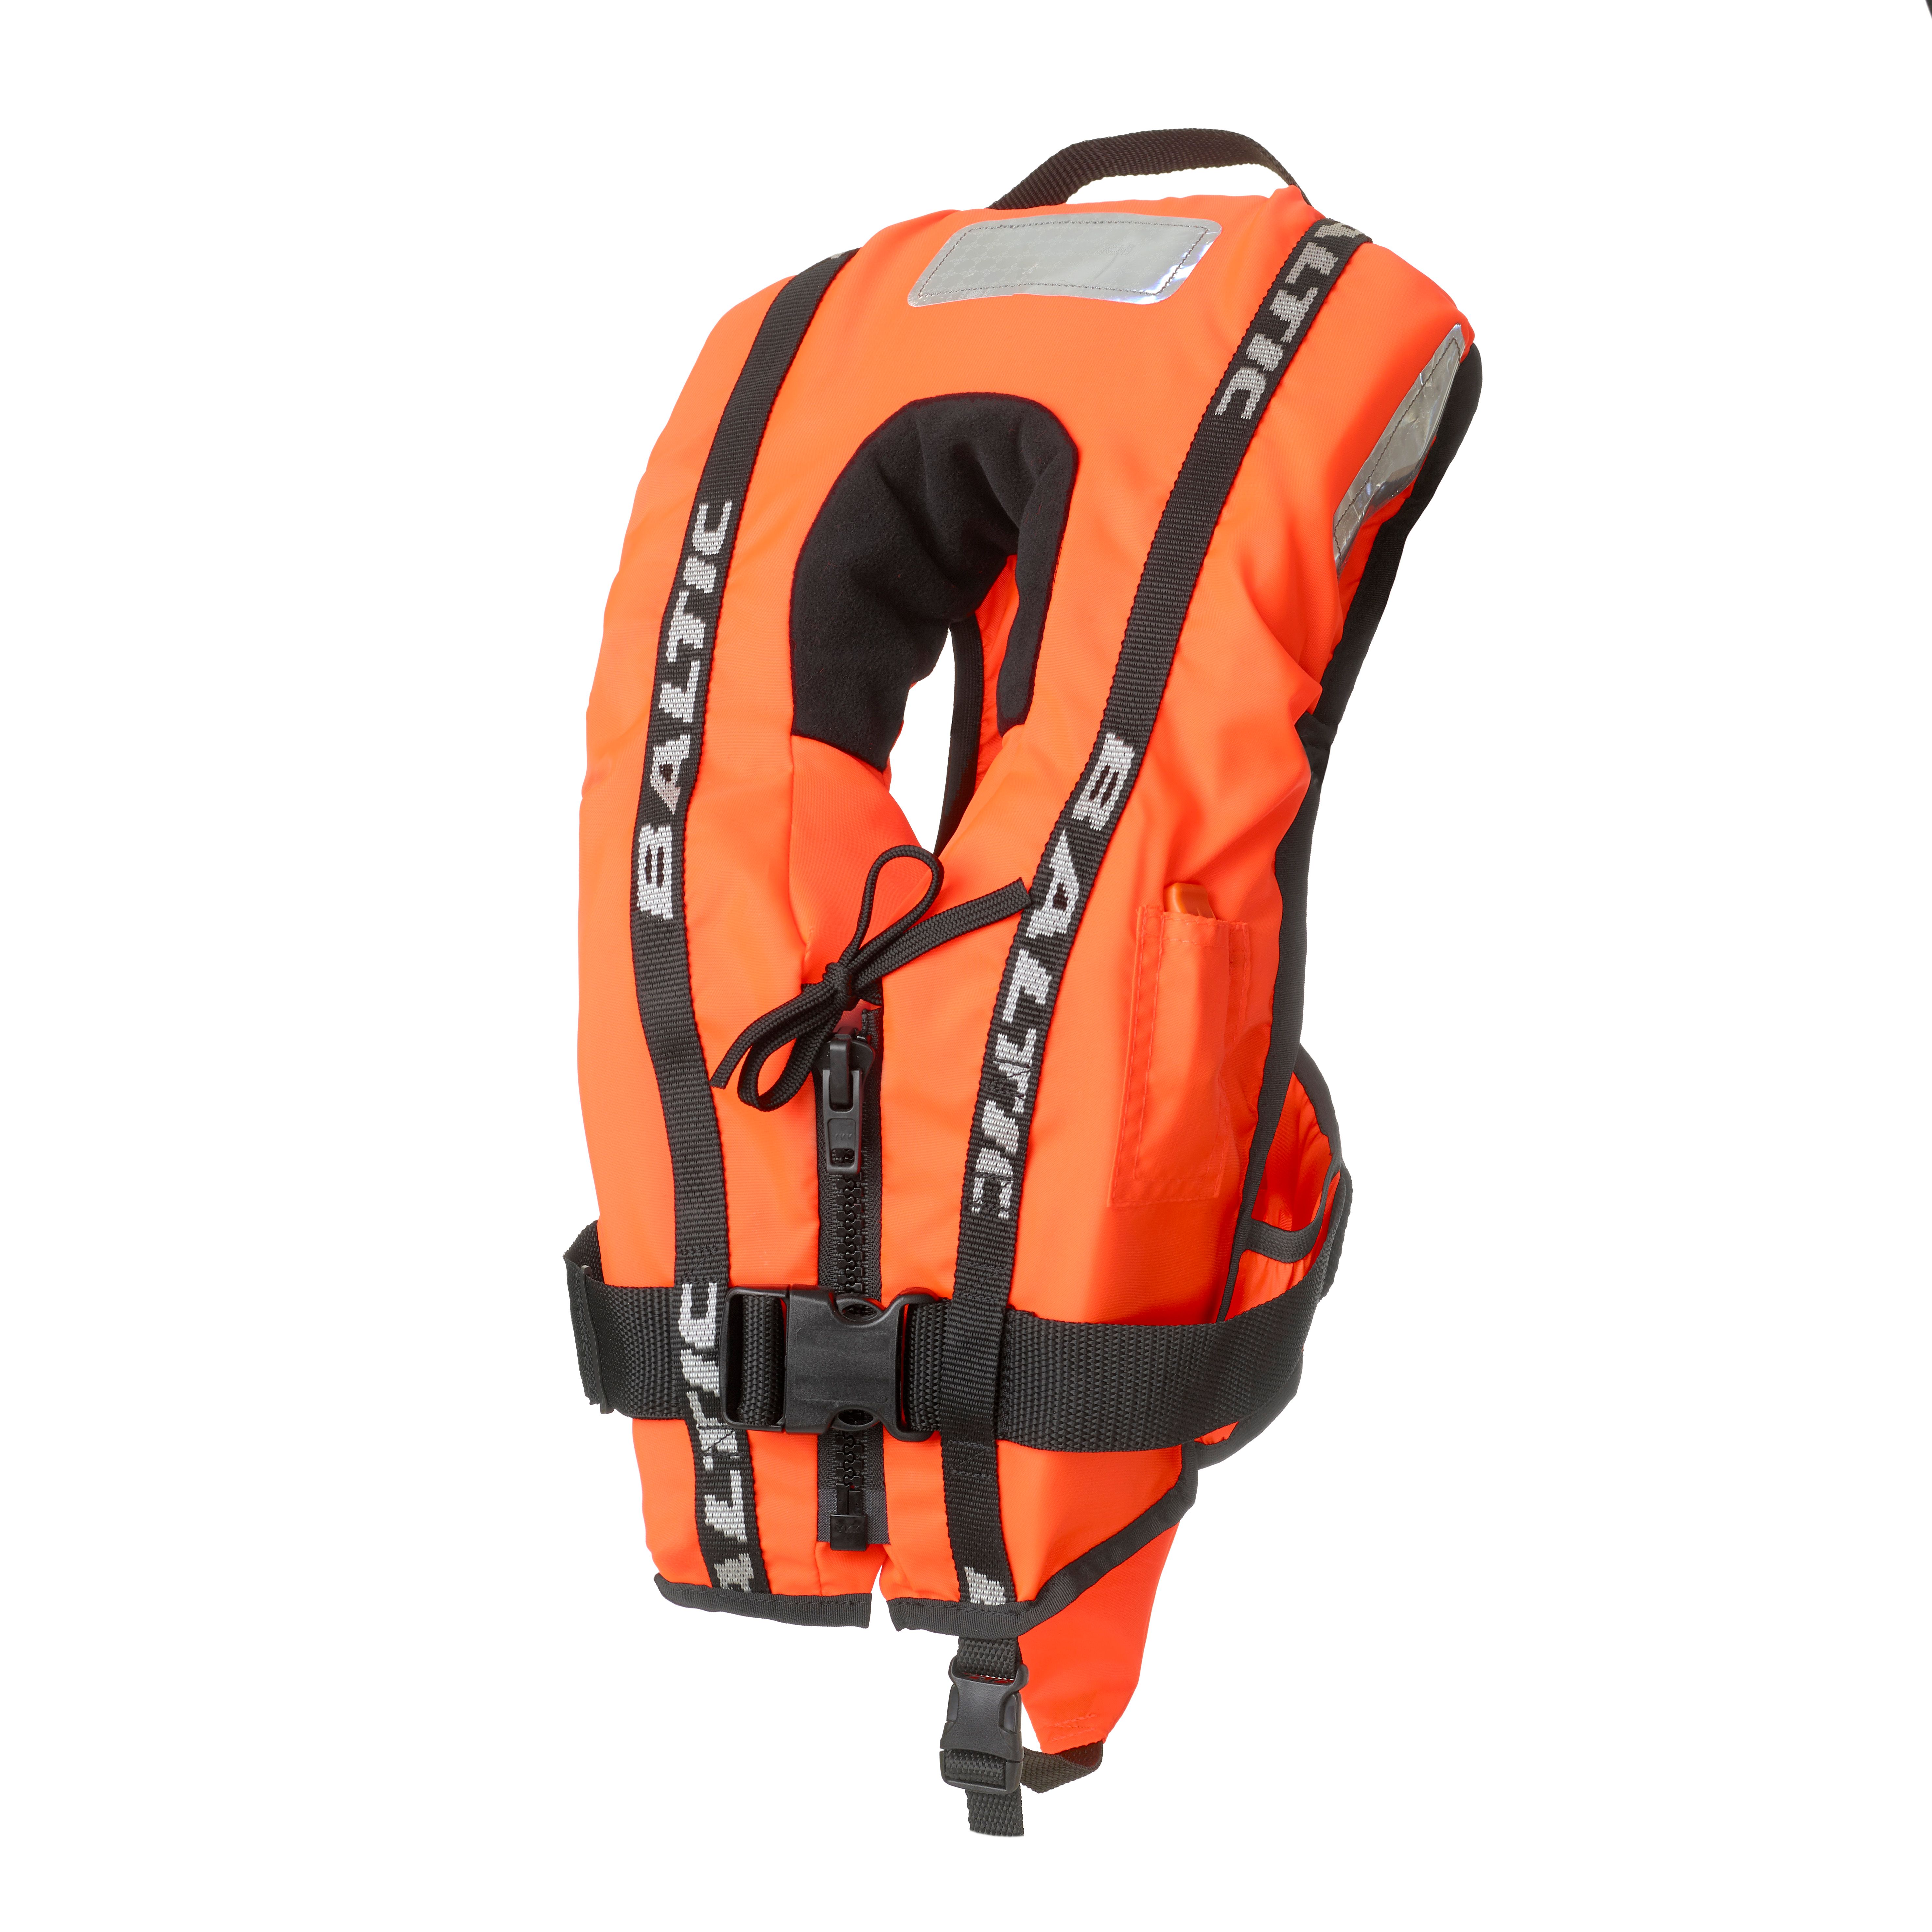 Baltic Bambi - 100n Foam Lifejacket - Crewsafe